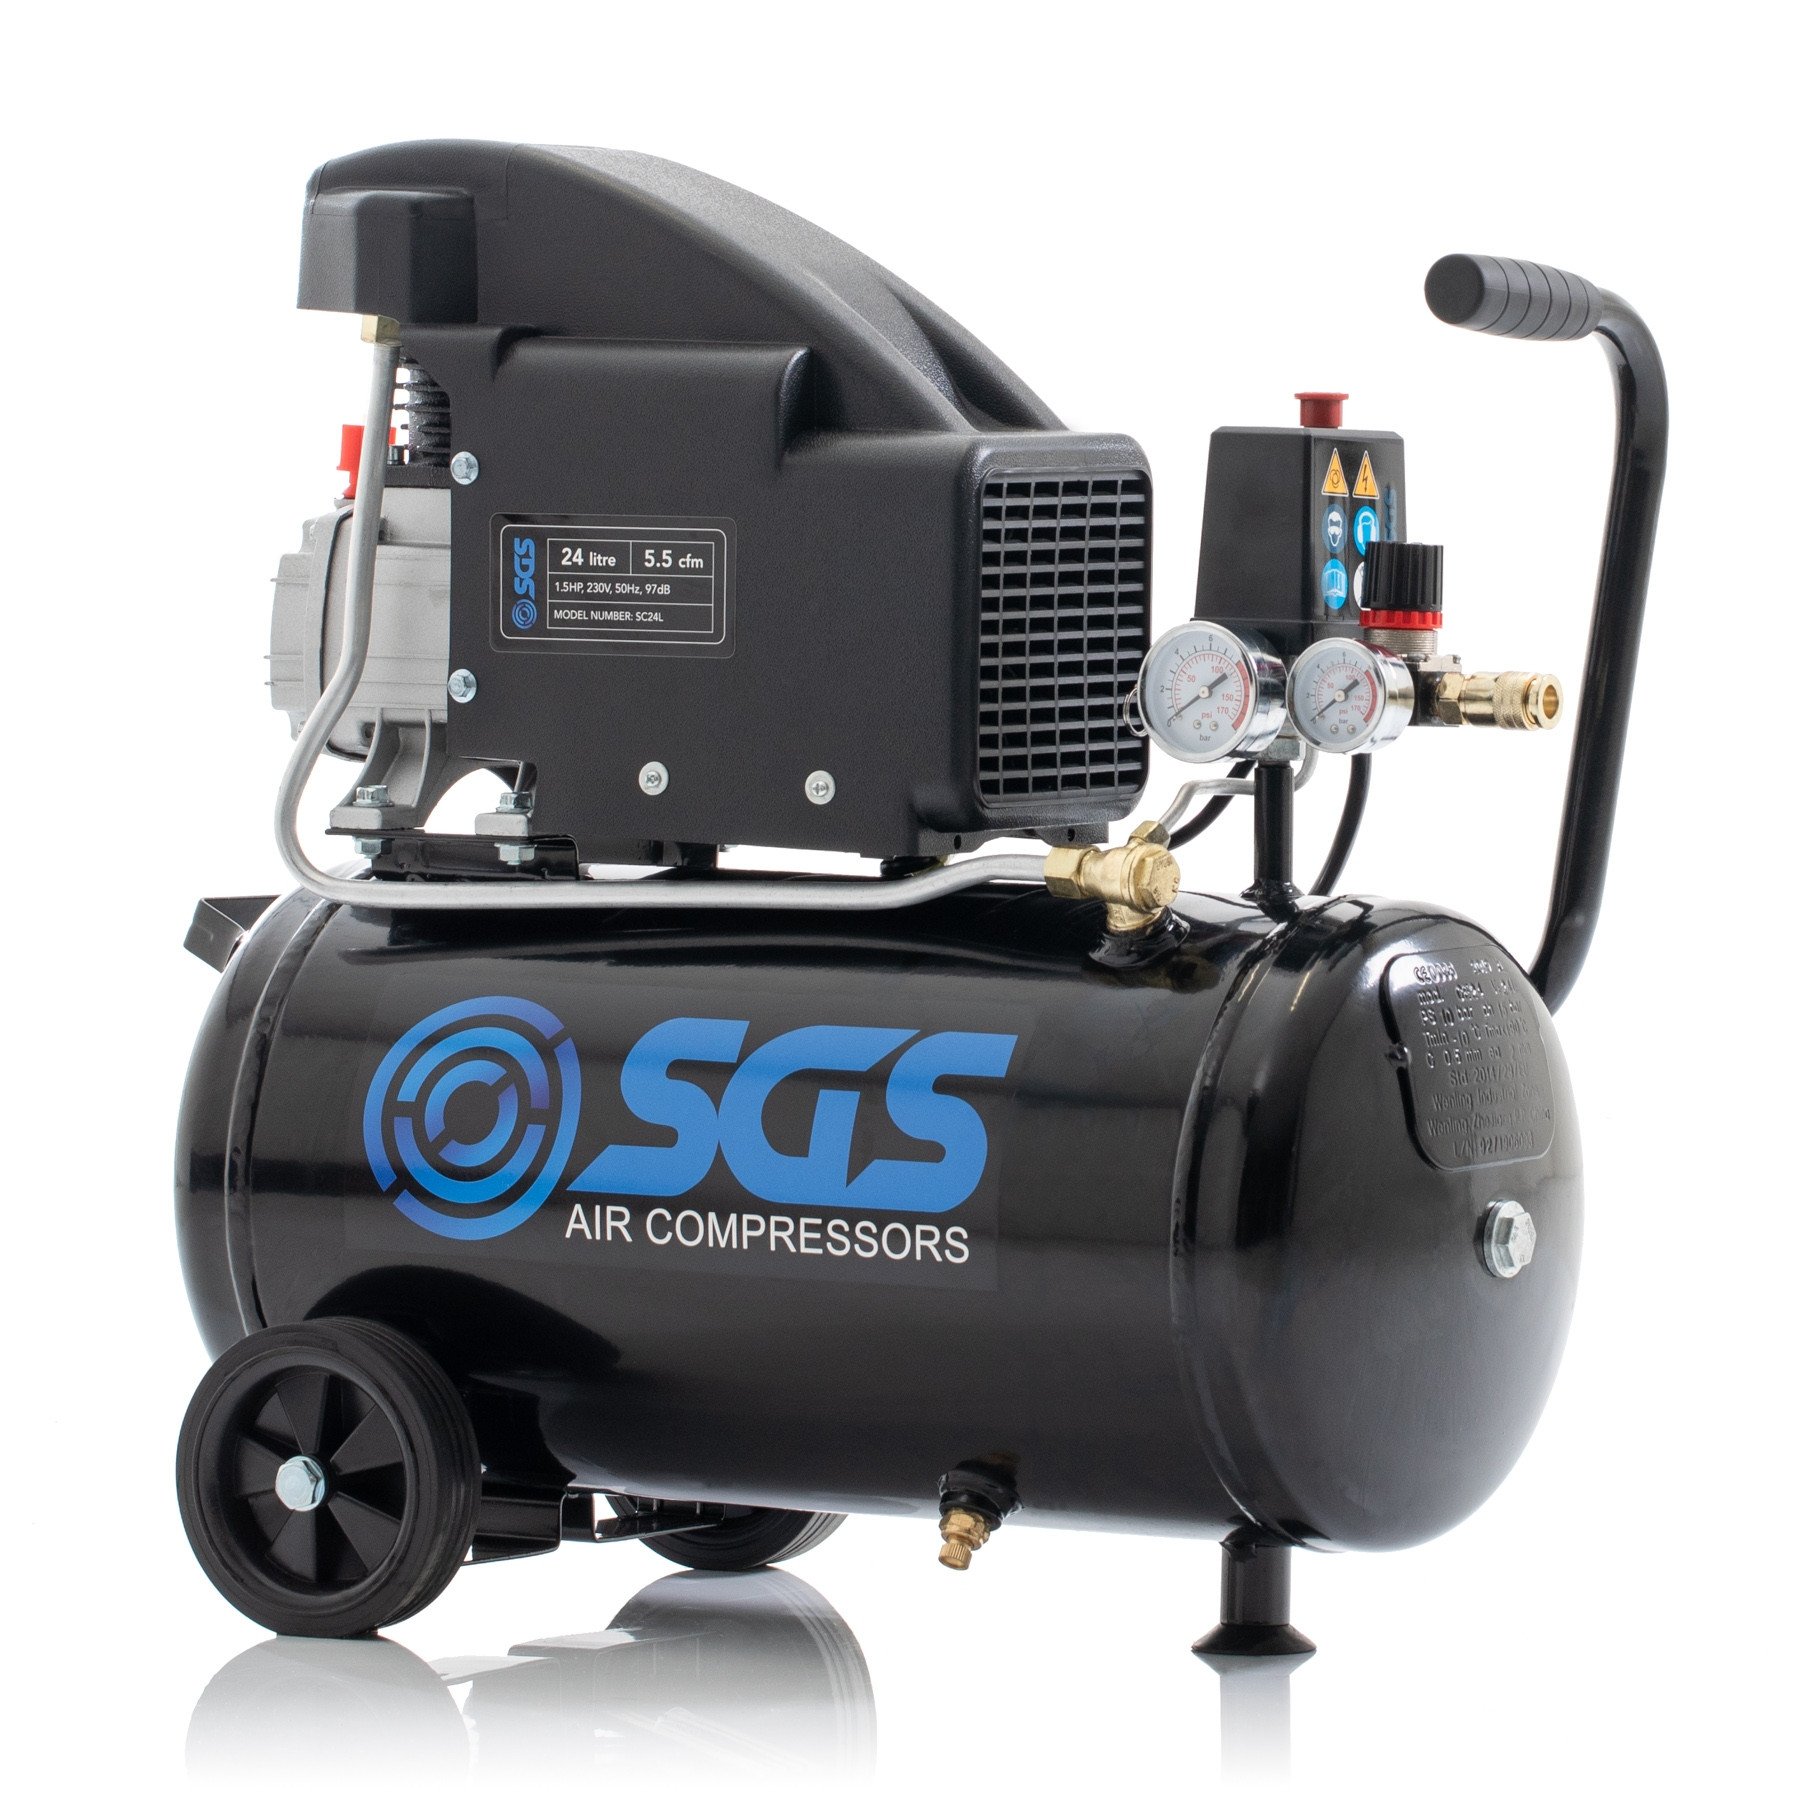 SGS 24升直接驱动空气压缩机- 5.5 CFM, 1.5马力